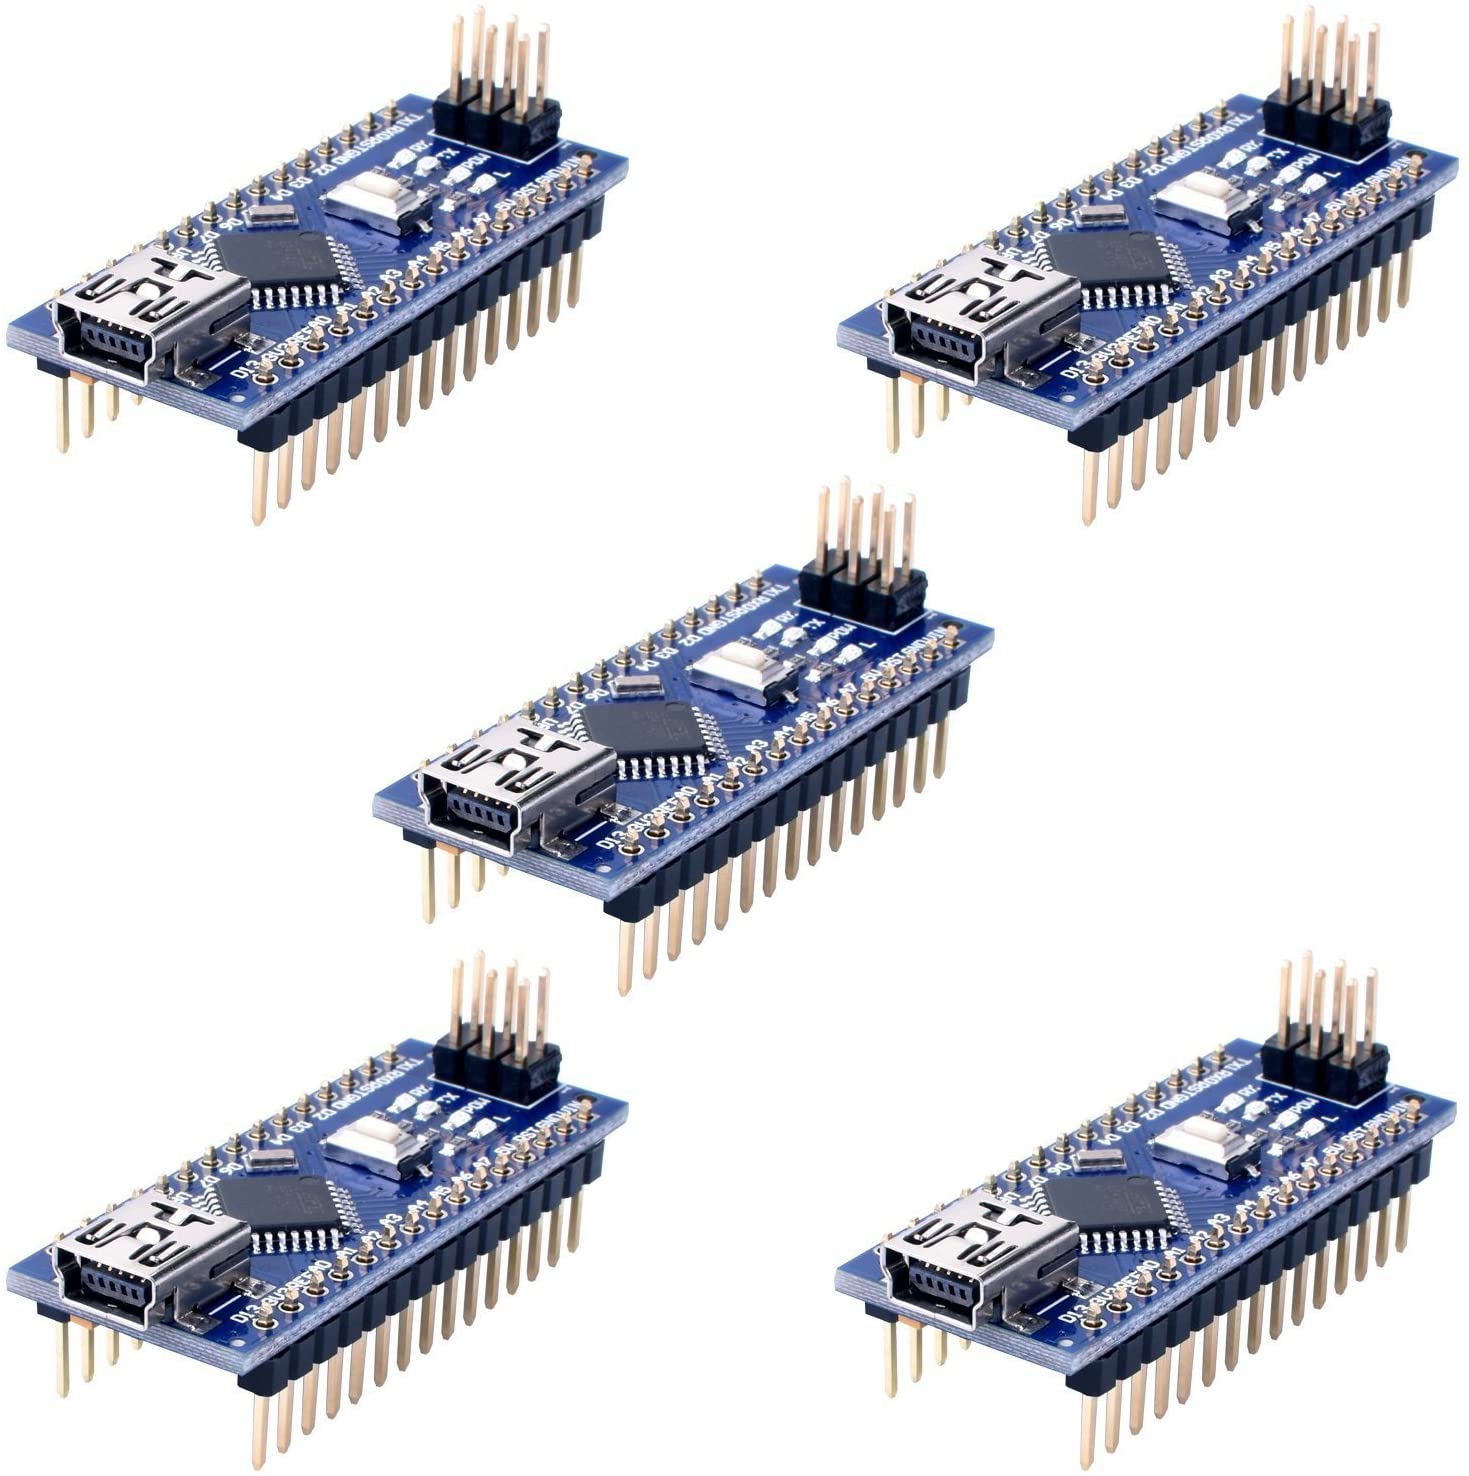 Longruner for ArduinoIDE Mini Nano V3.0 ATmega328P 5V 16M Micro Controller Board Module with USB Cable for Arduino 5Pcs